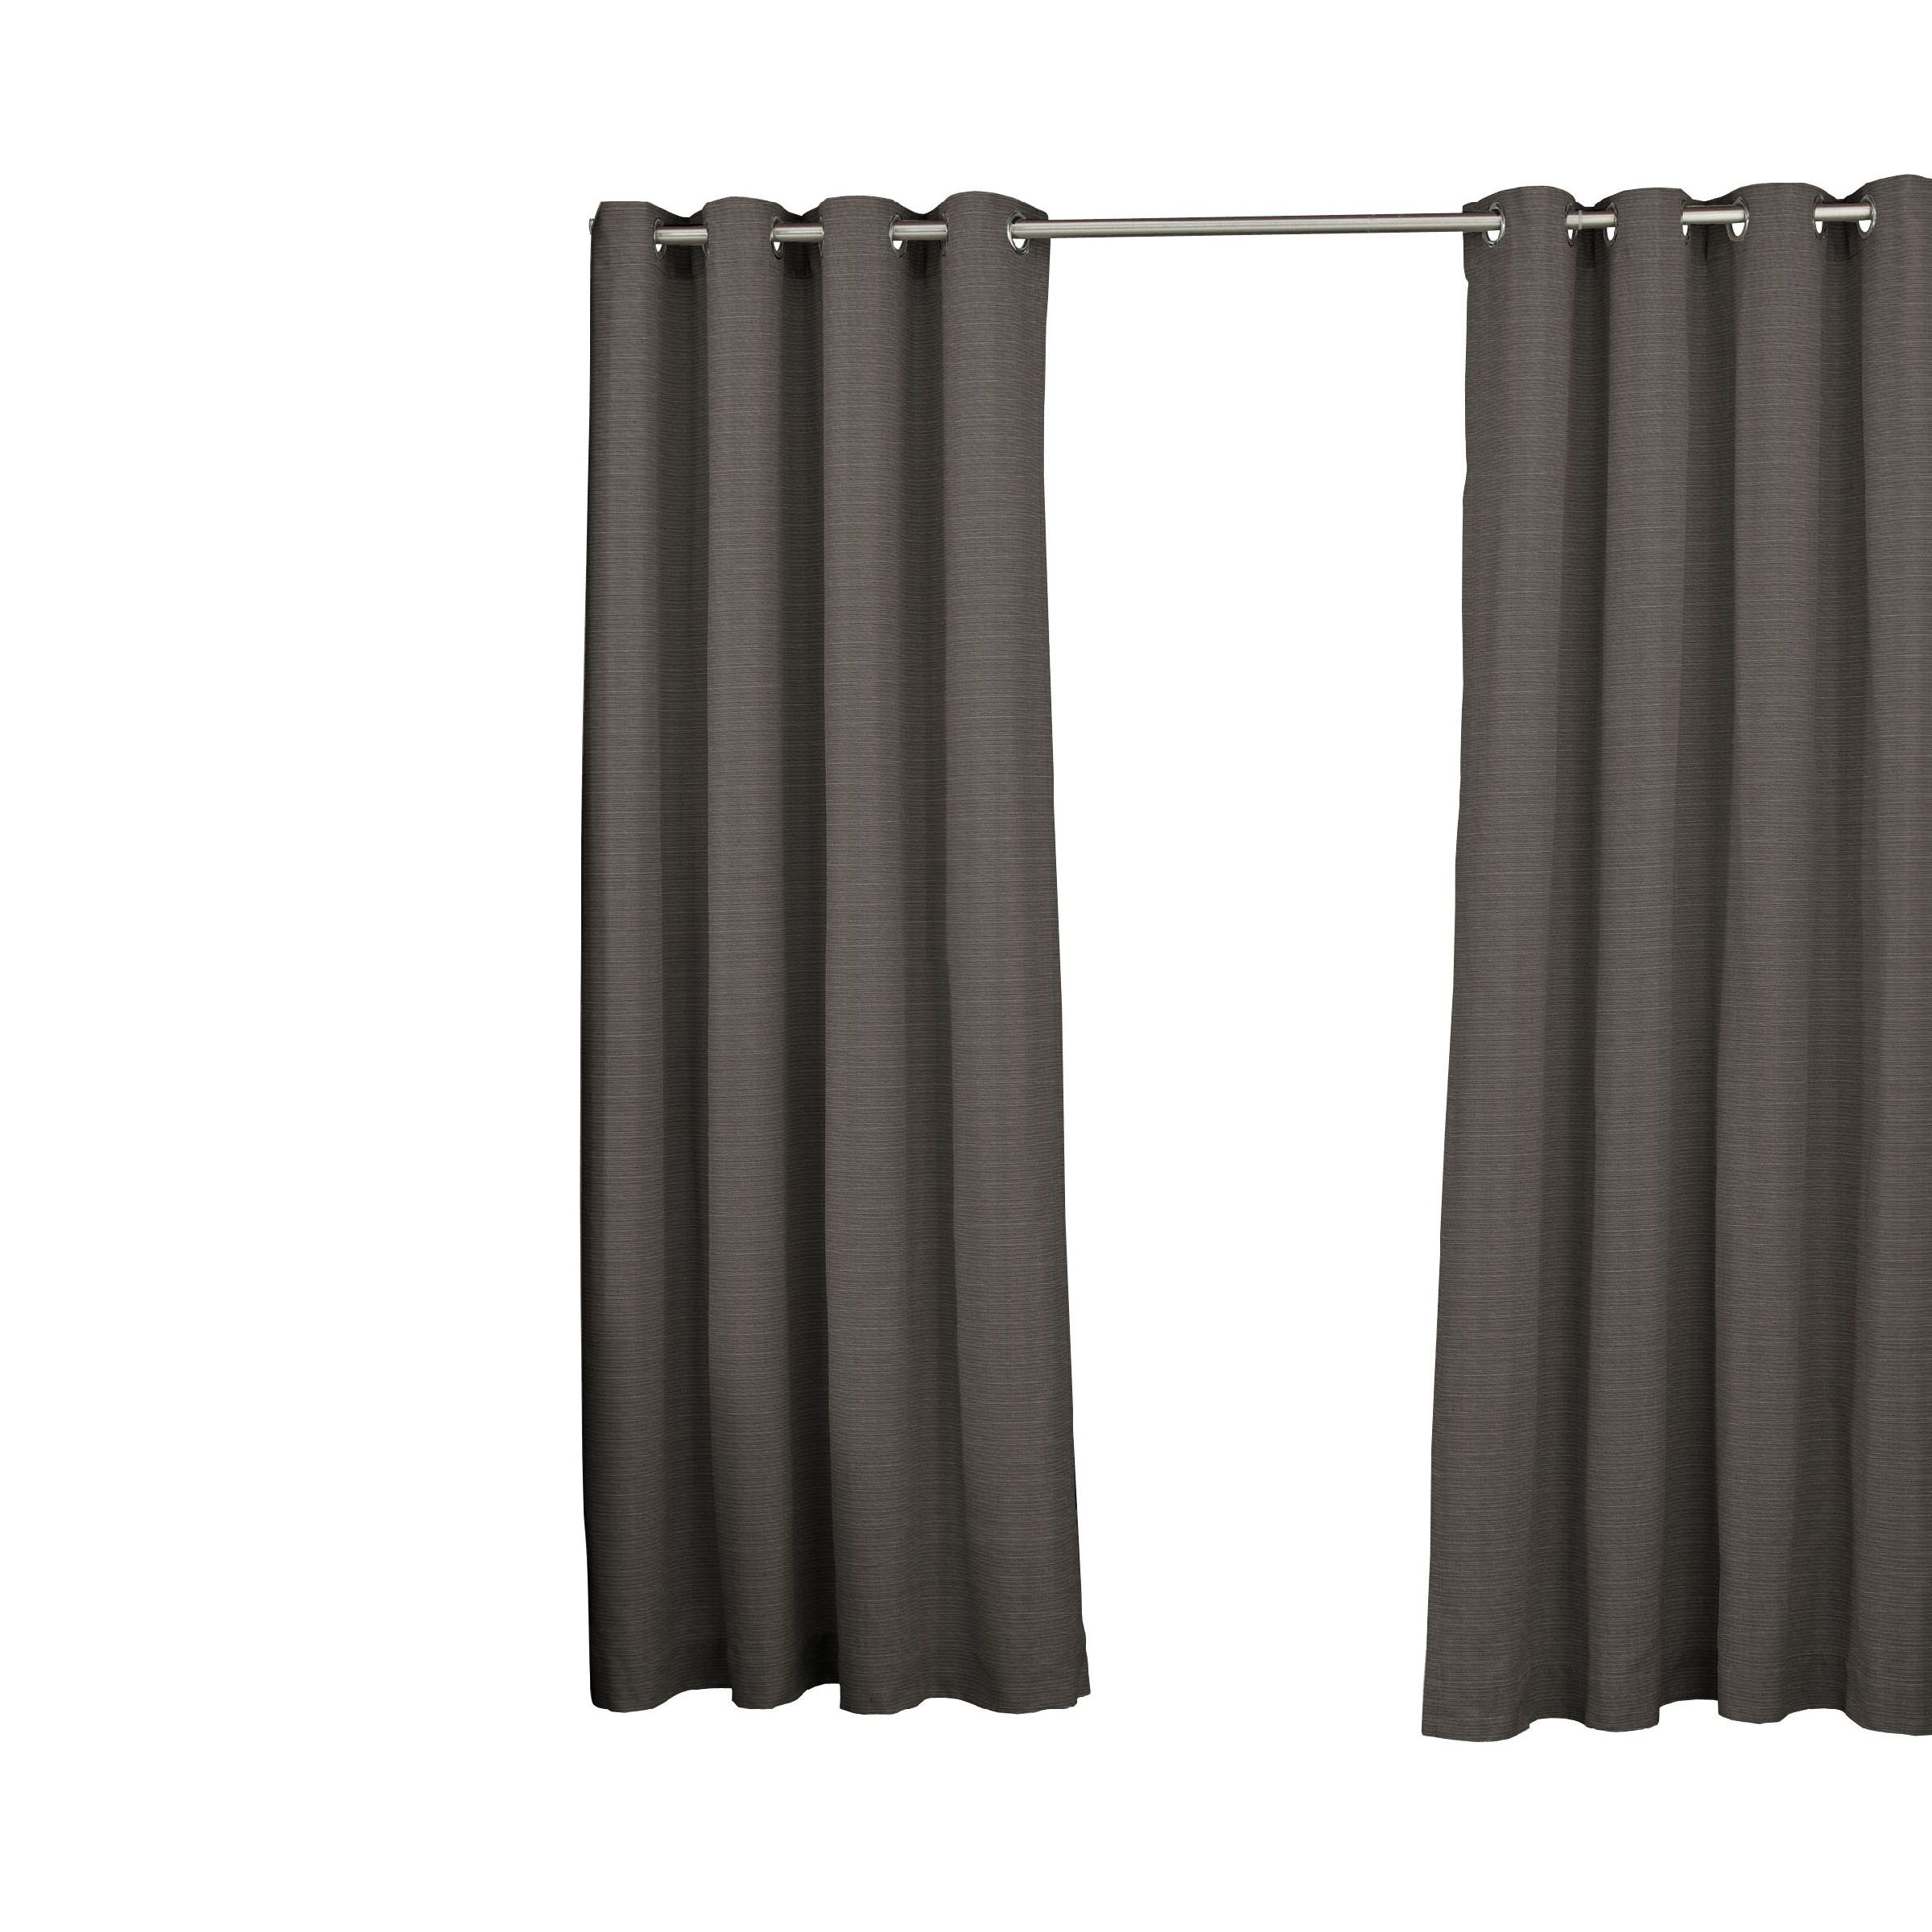 Patio Grommet Top Single Curtain Panels Regarding Well Known Key Largo Solid Semi Sheer Thermal Grommet Single Curtain Panel (View 19 of 20)